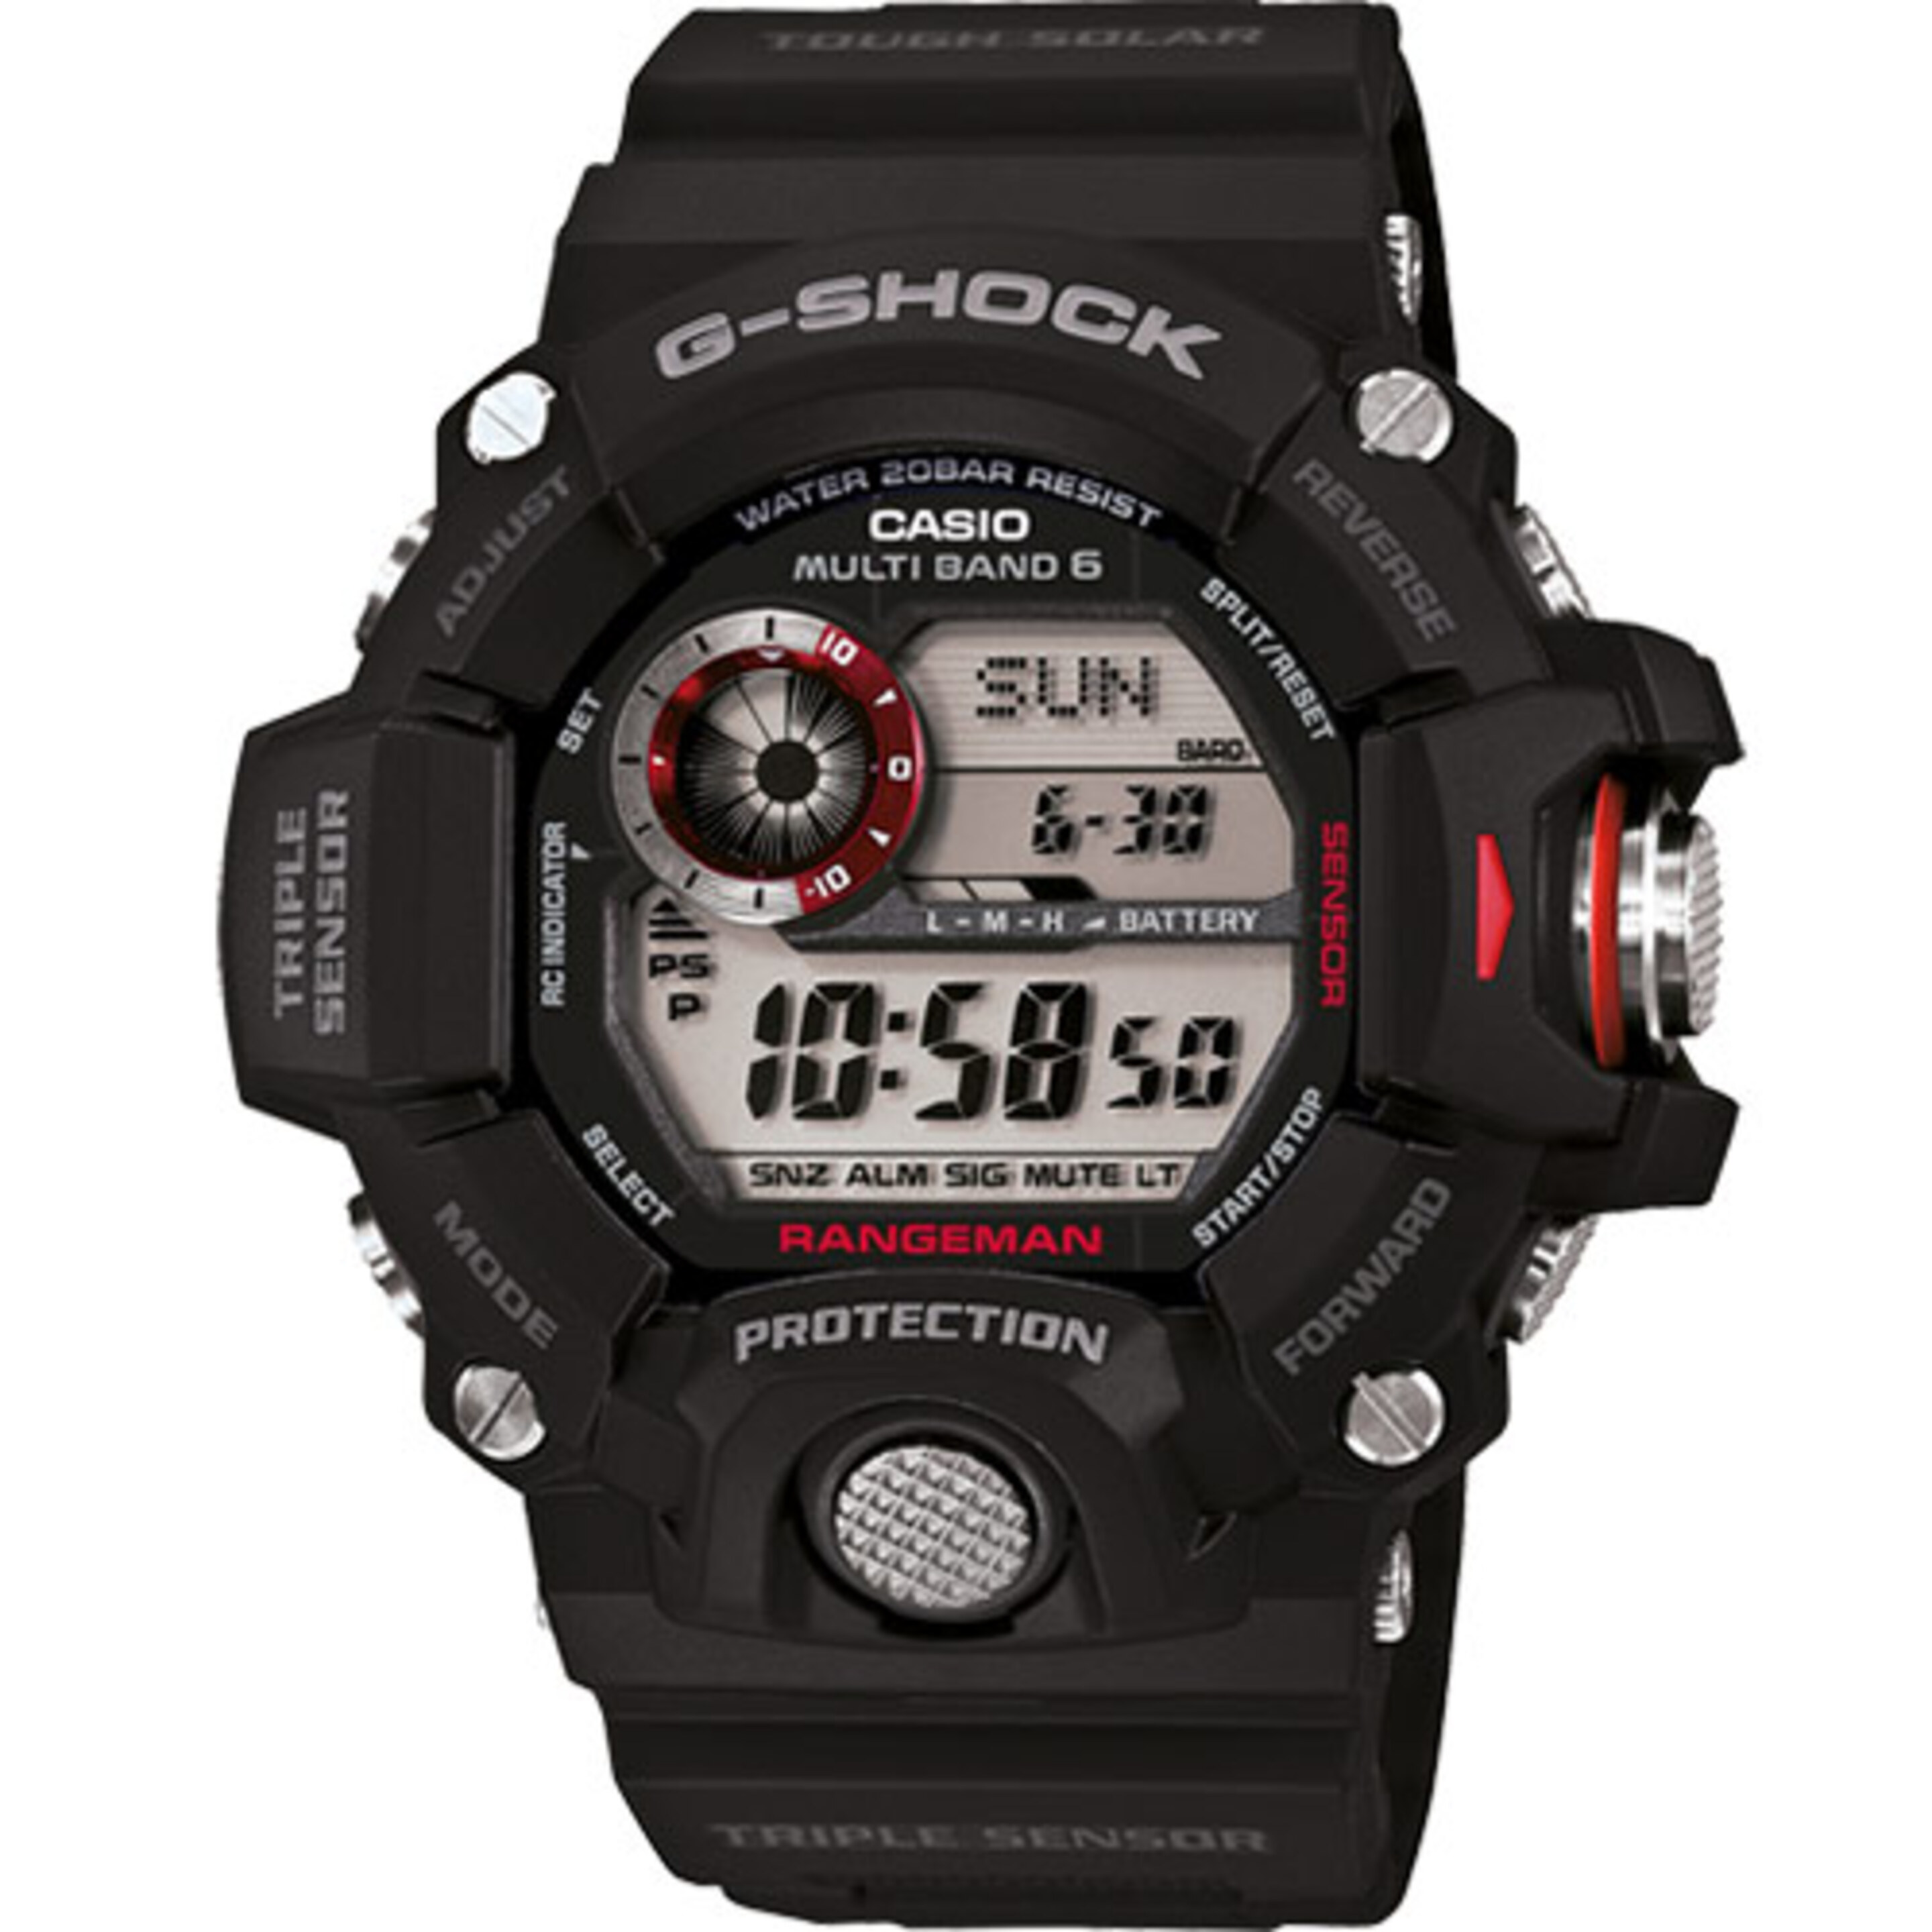 Reloj G-shock Rangeman Gw-9400-1er - negro - G-shock Rangeman  MKP